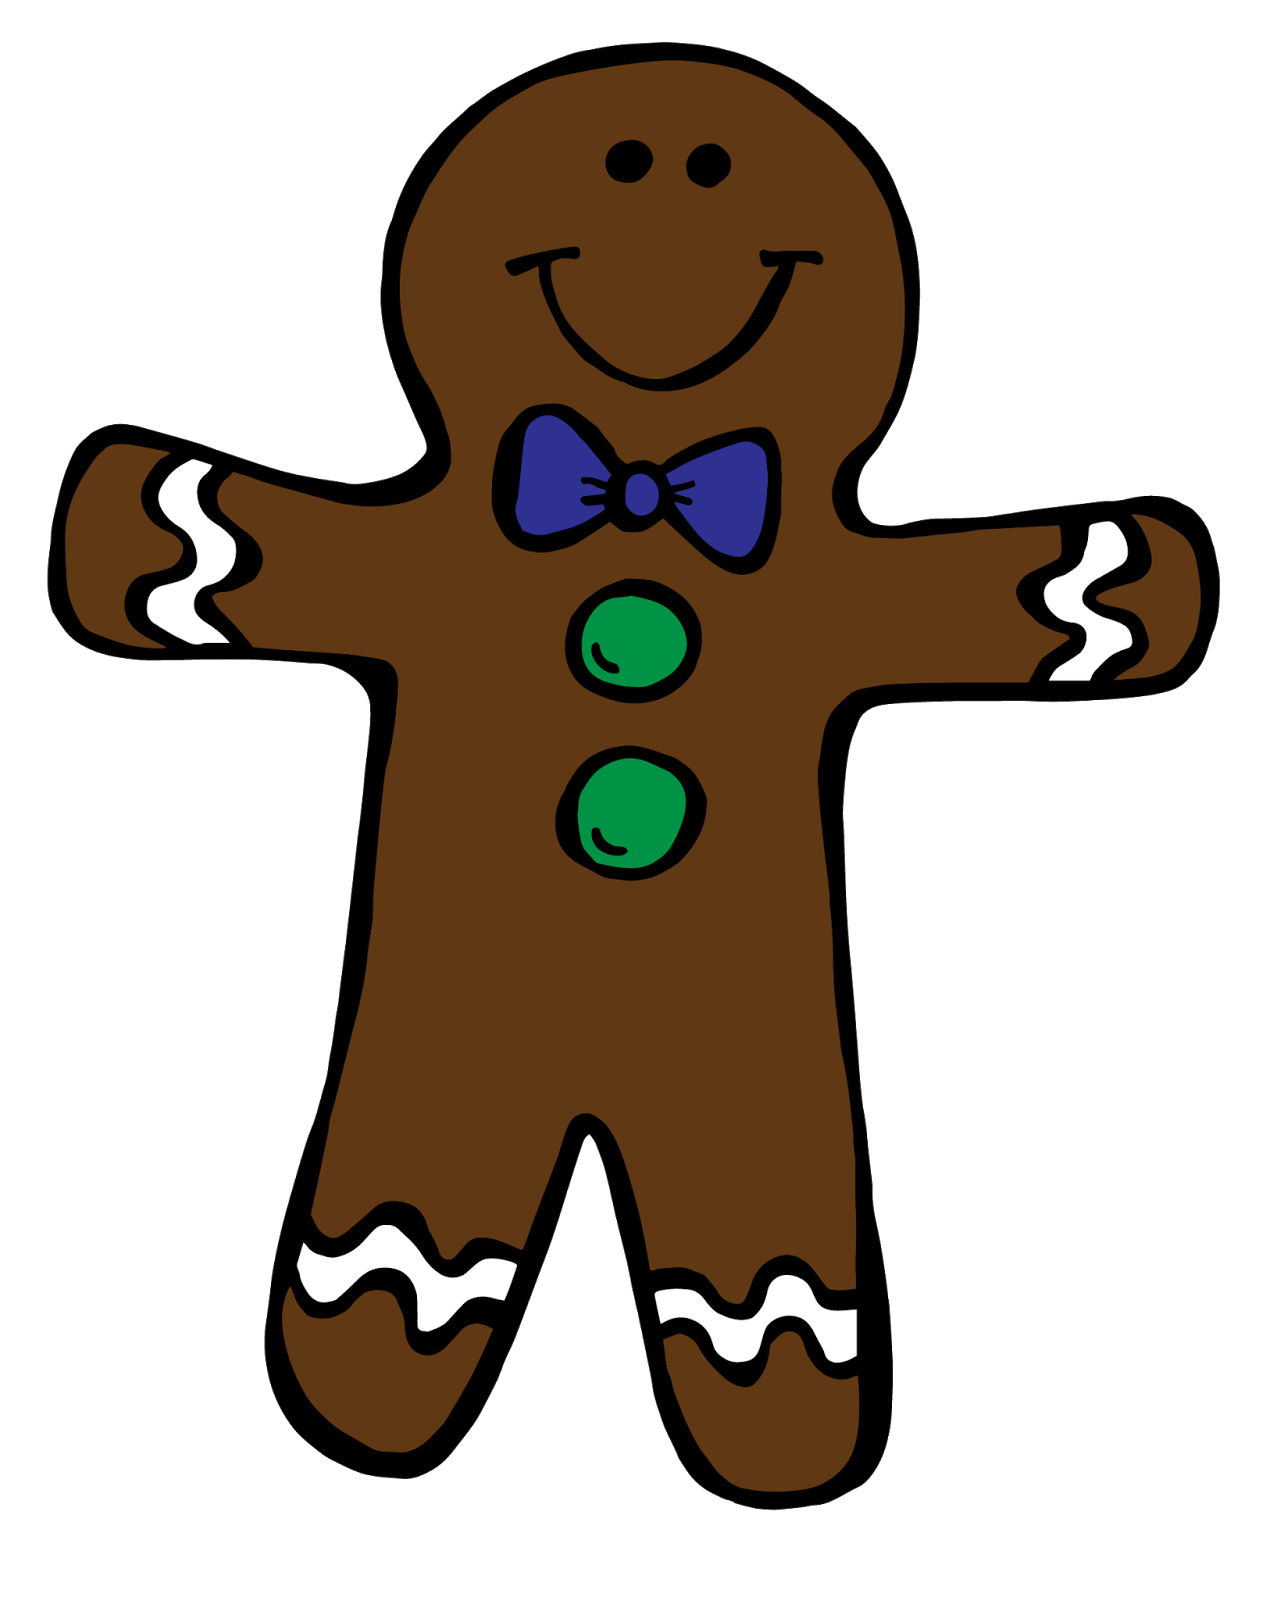 Gingerbread clipart character. Man jokingart com